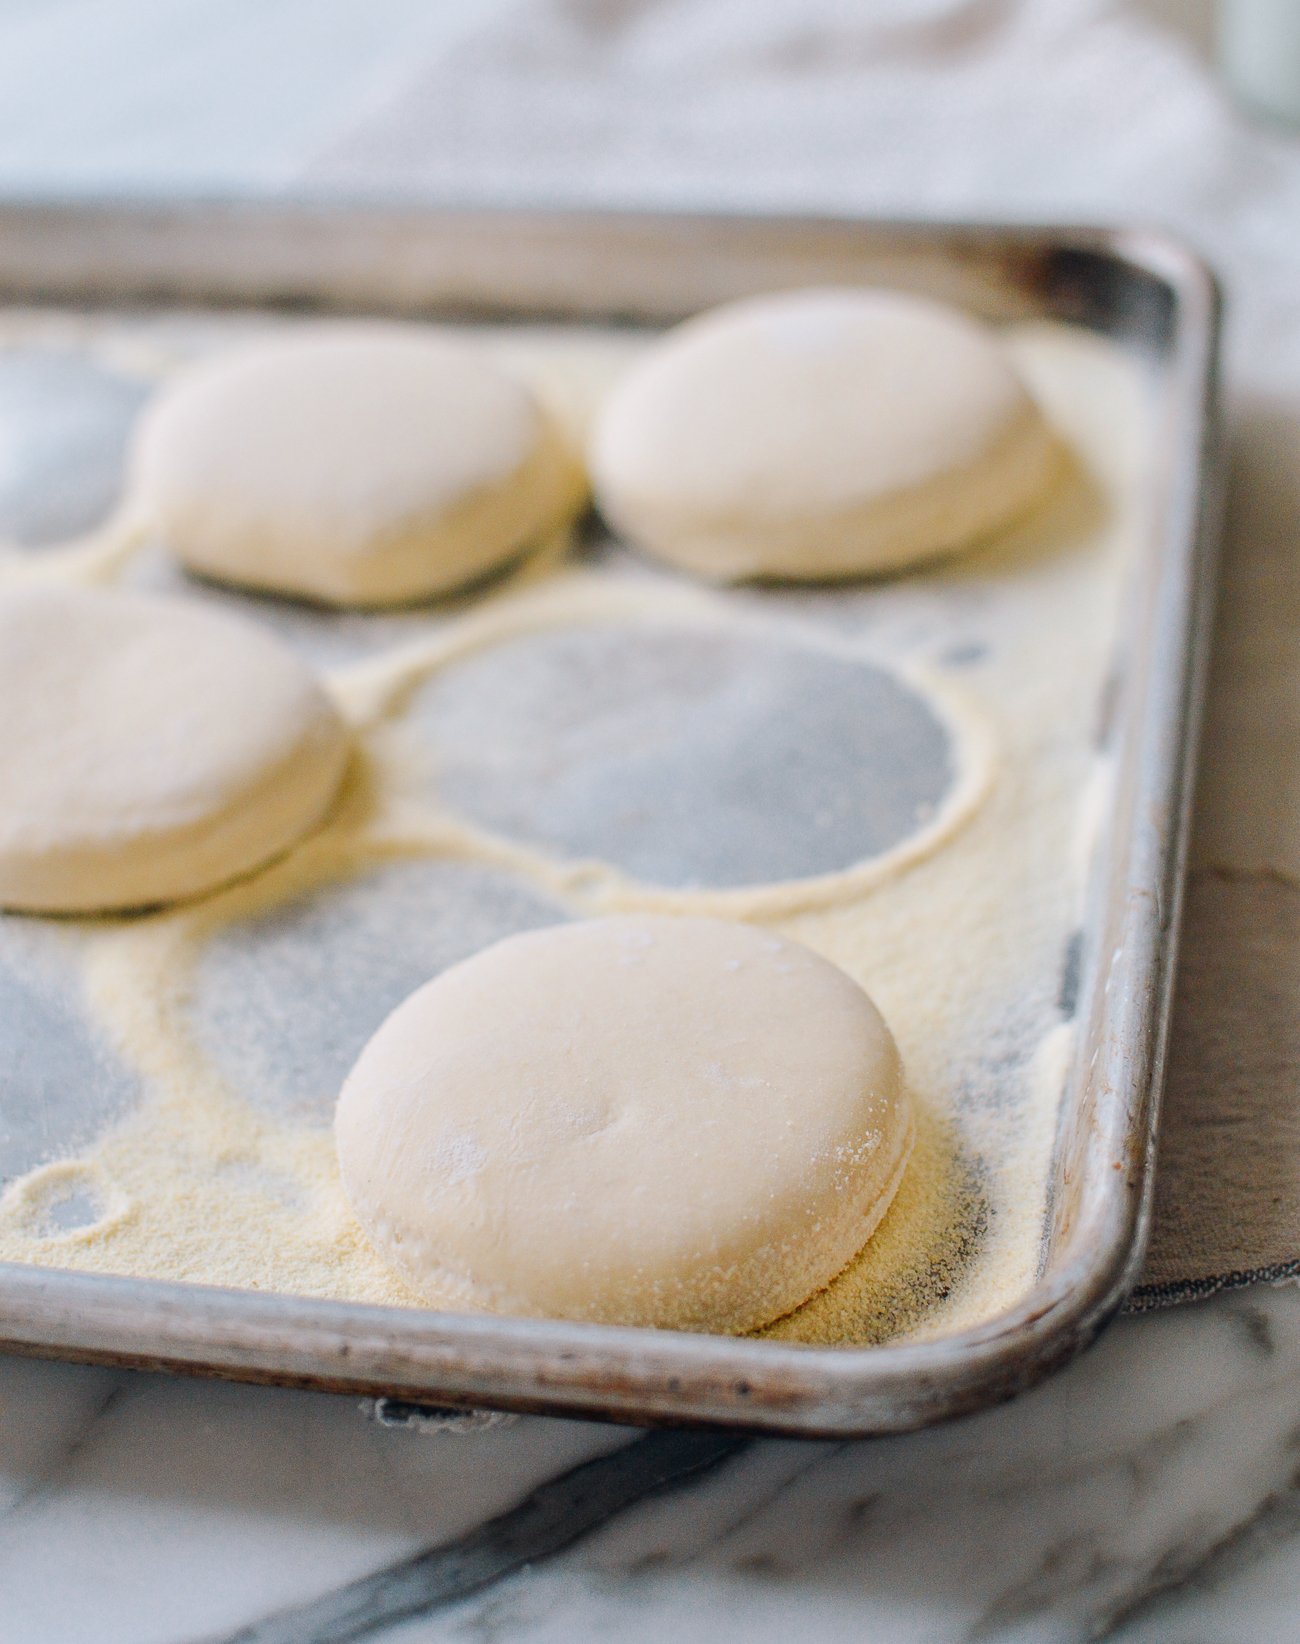 English muffins on sheet pan before cooking